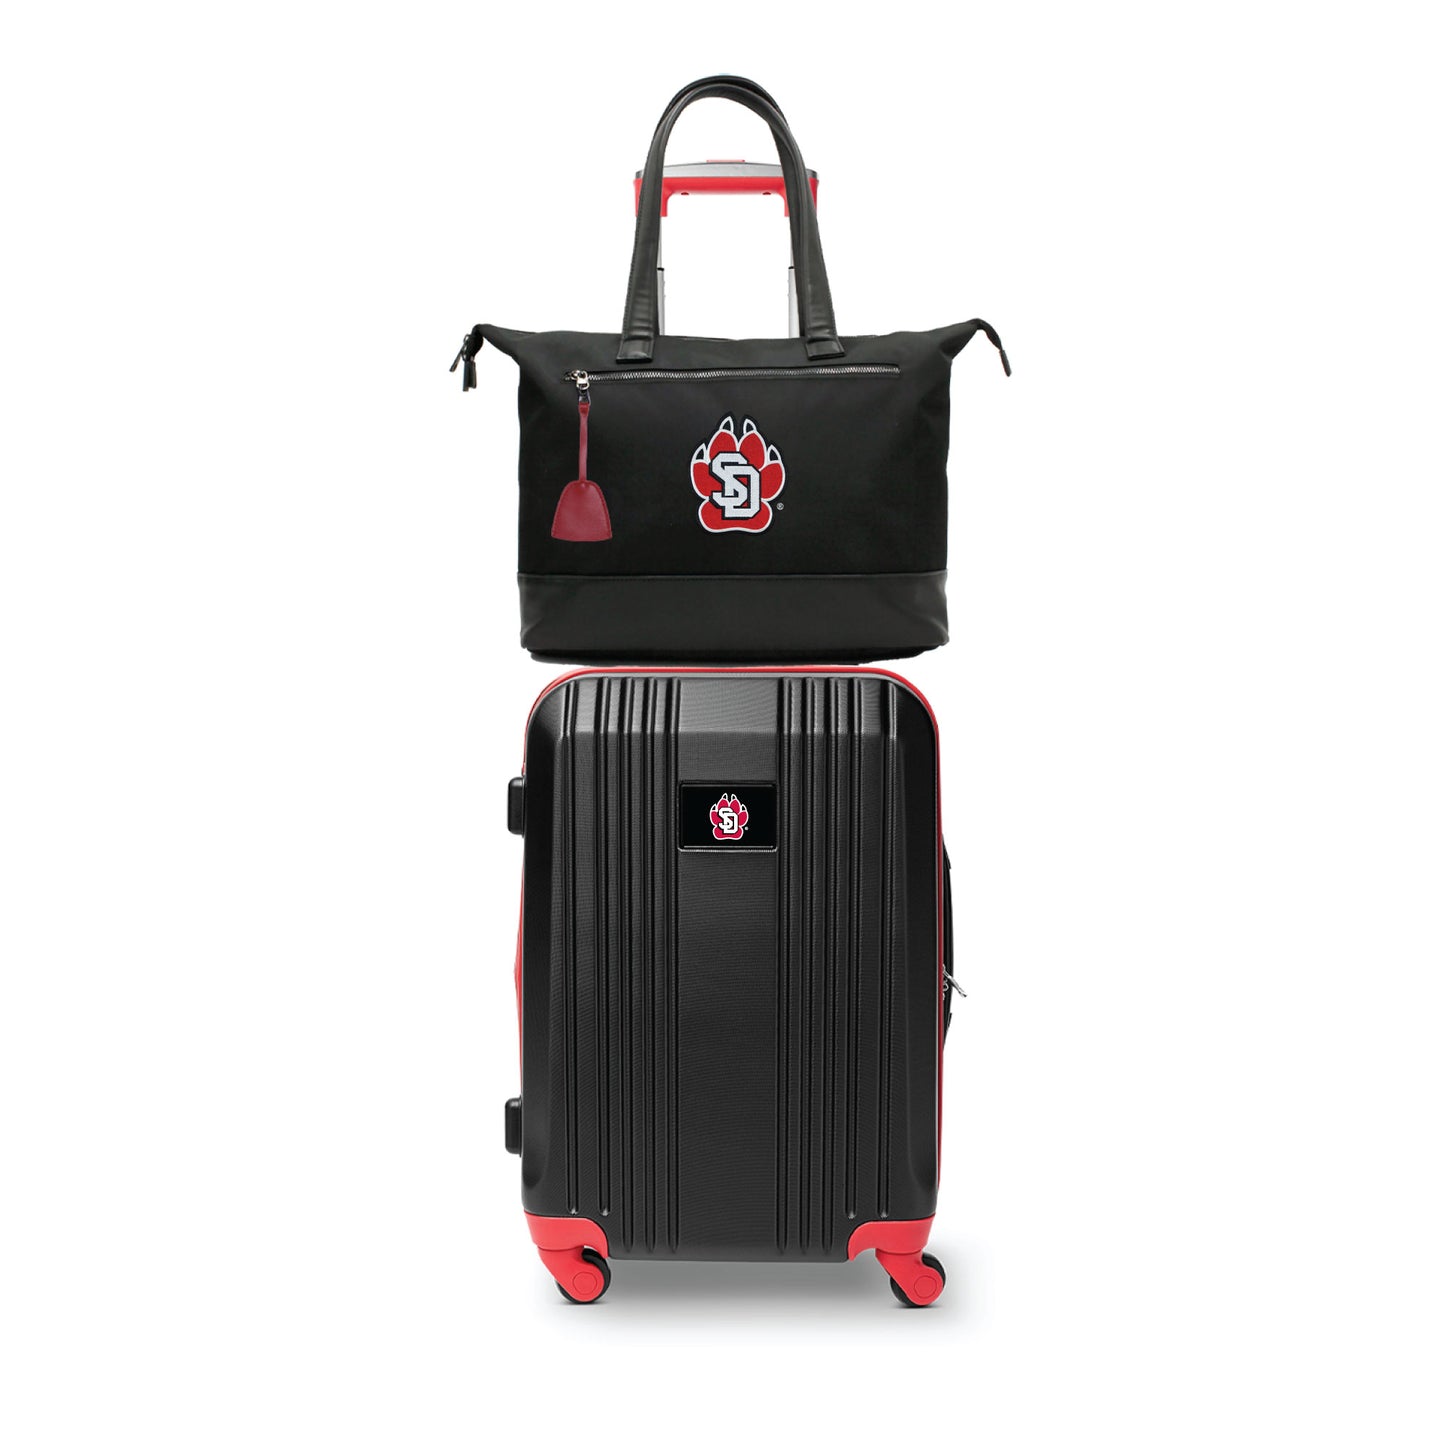 South Dakota Coyotes Premium Laptop Tote Bag and Luggage Set